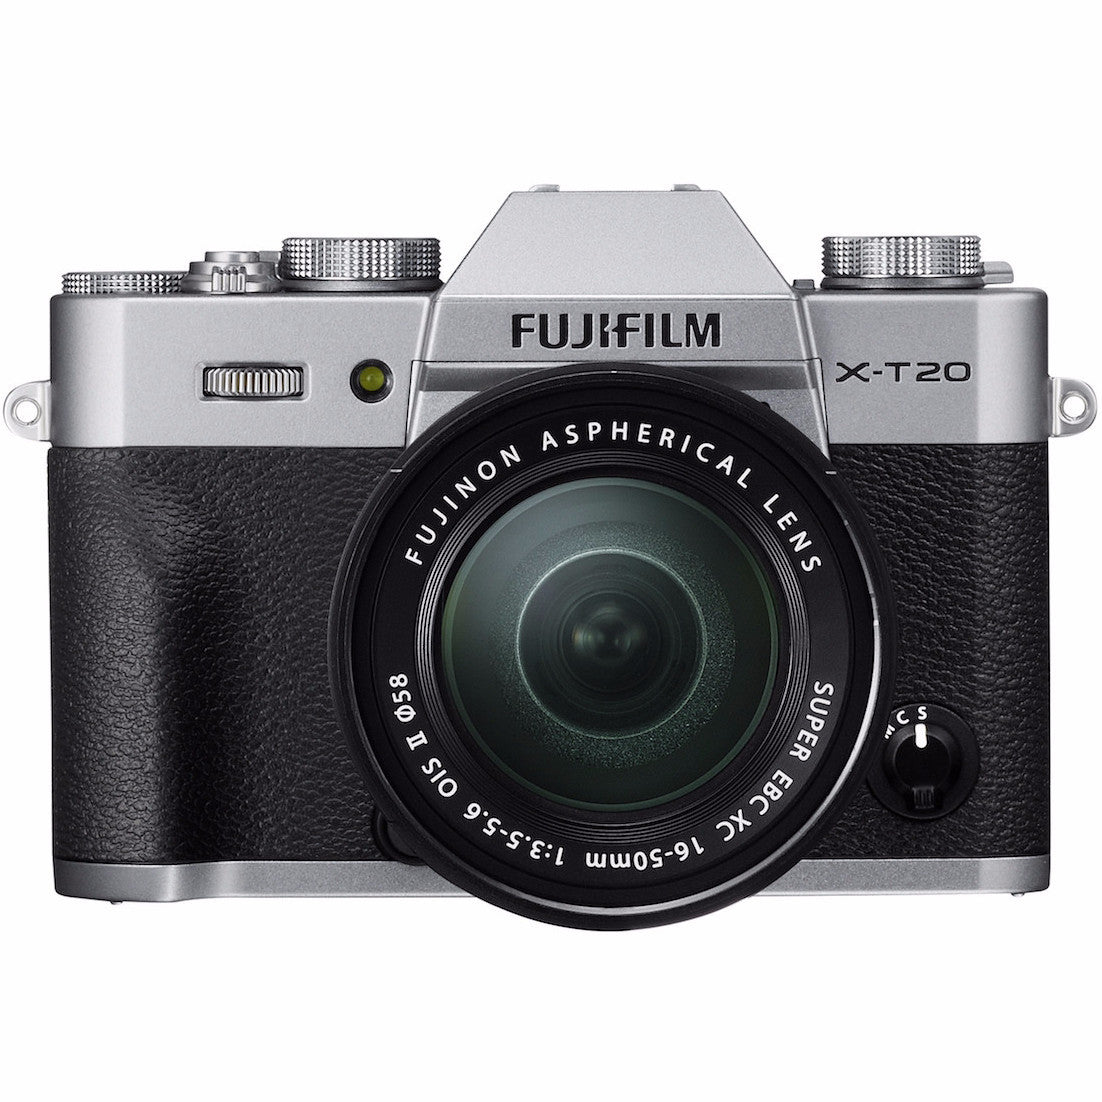 Fujifilm X-T20 Body with XC 16-50mm Lens Kit (Silver), camera mirrorless cameras, Fujifilm - Pictureline  - 1